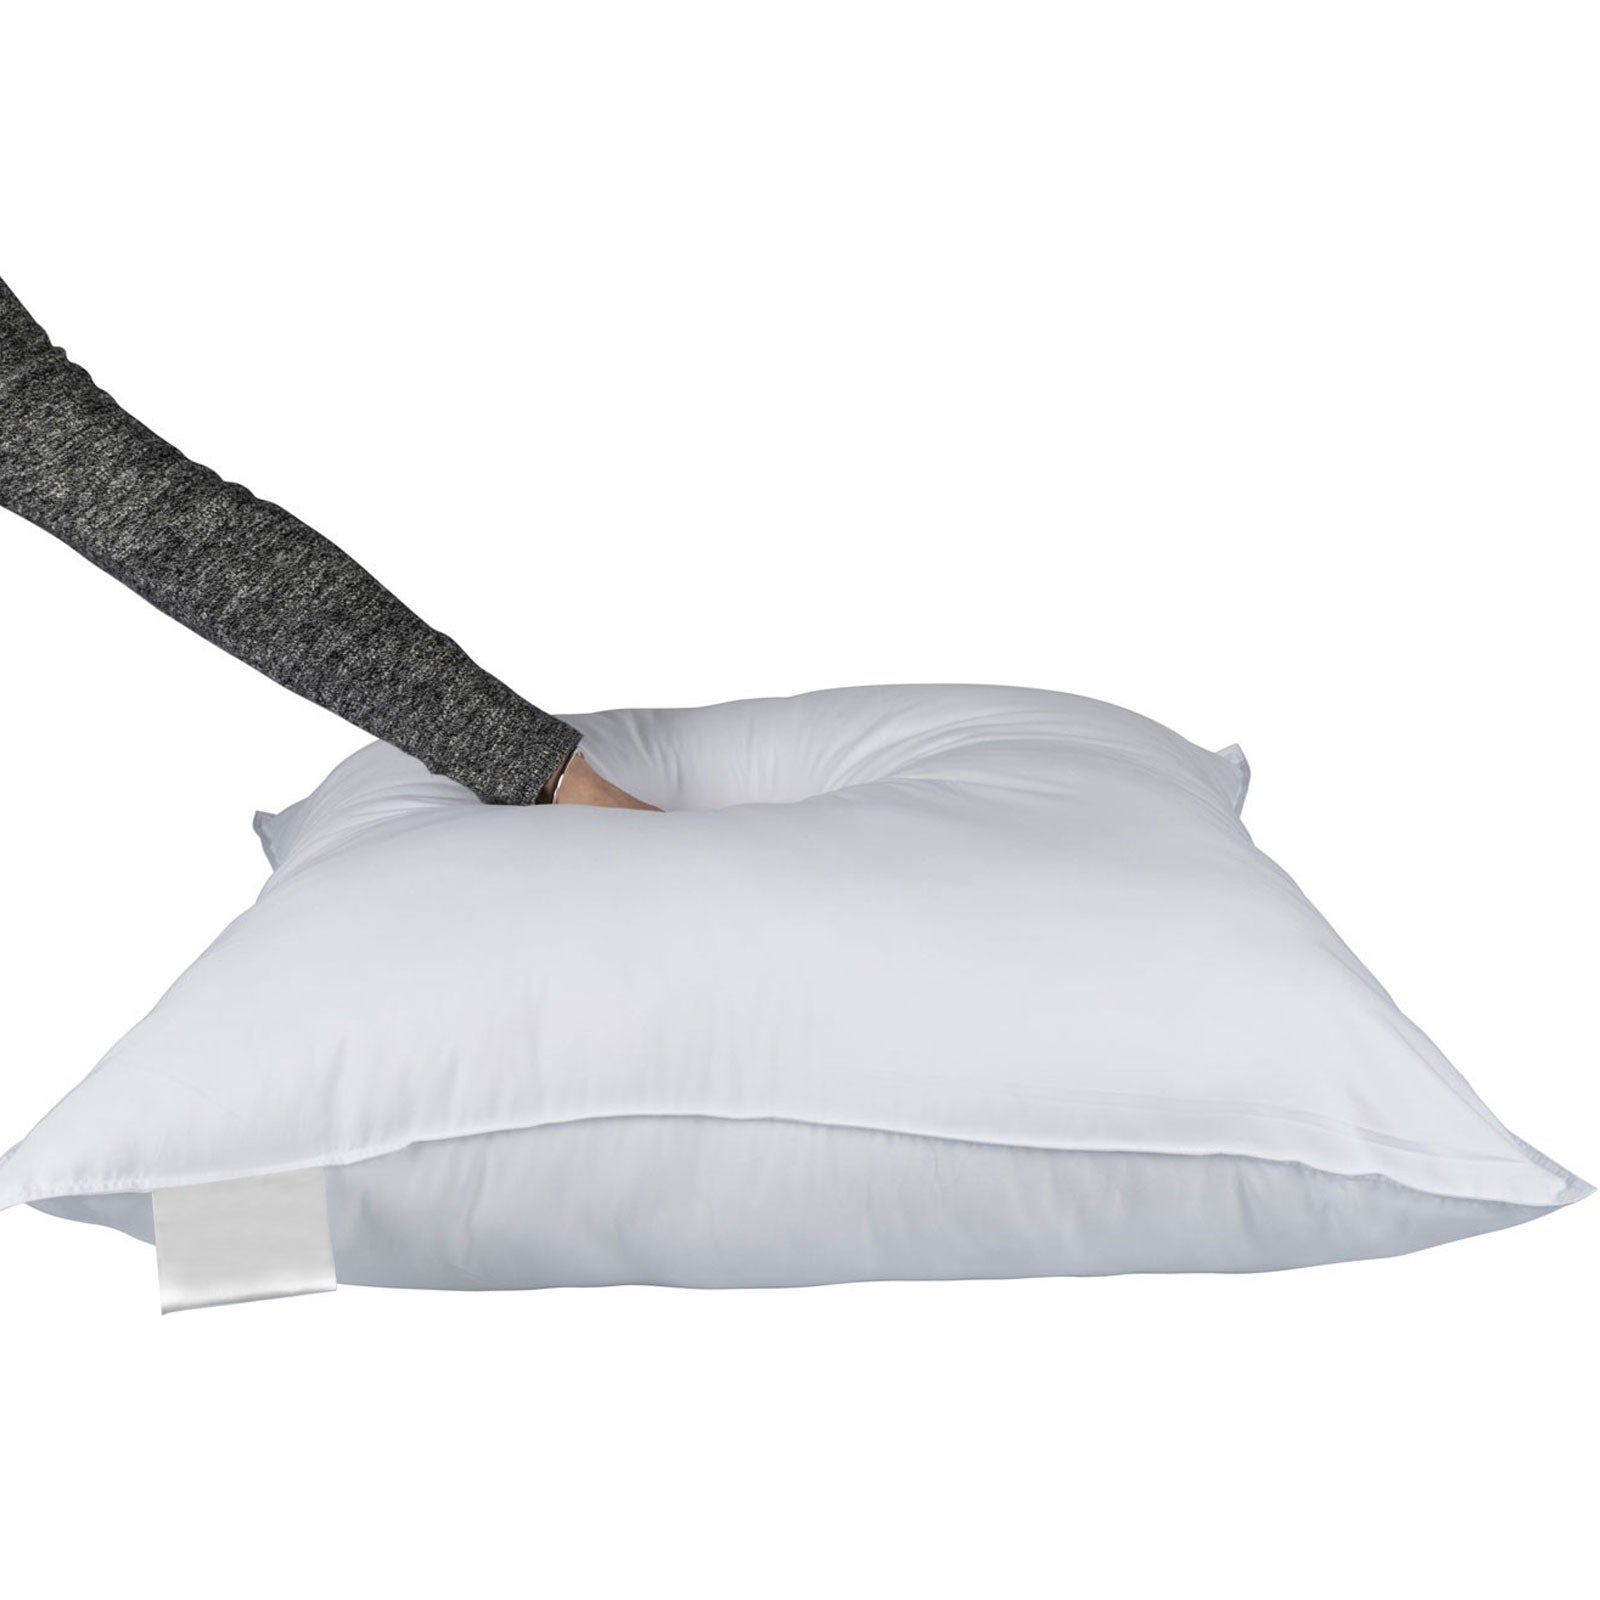 are microfiber pillows good